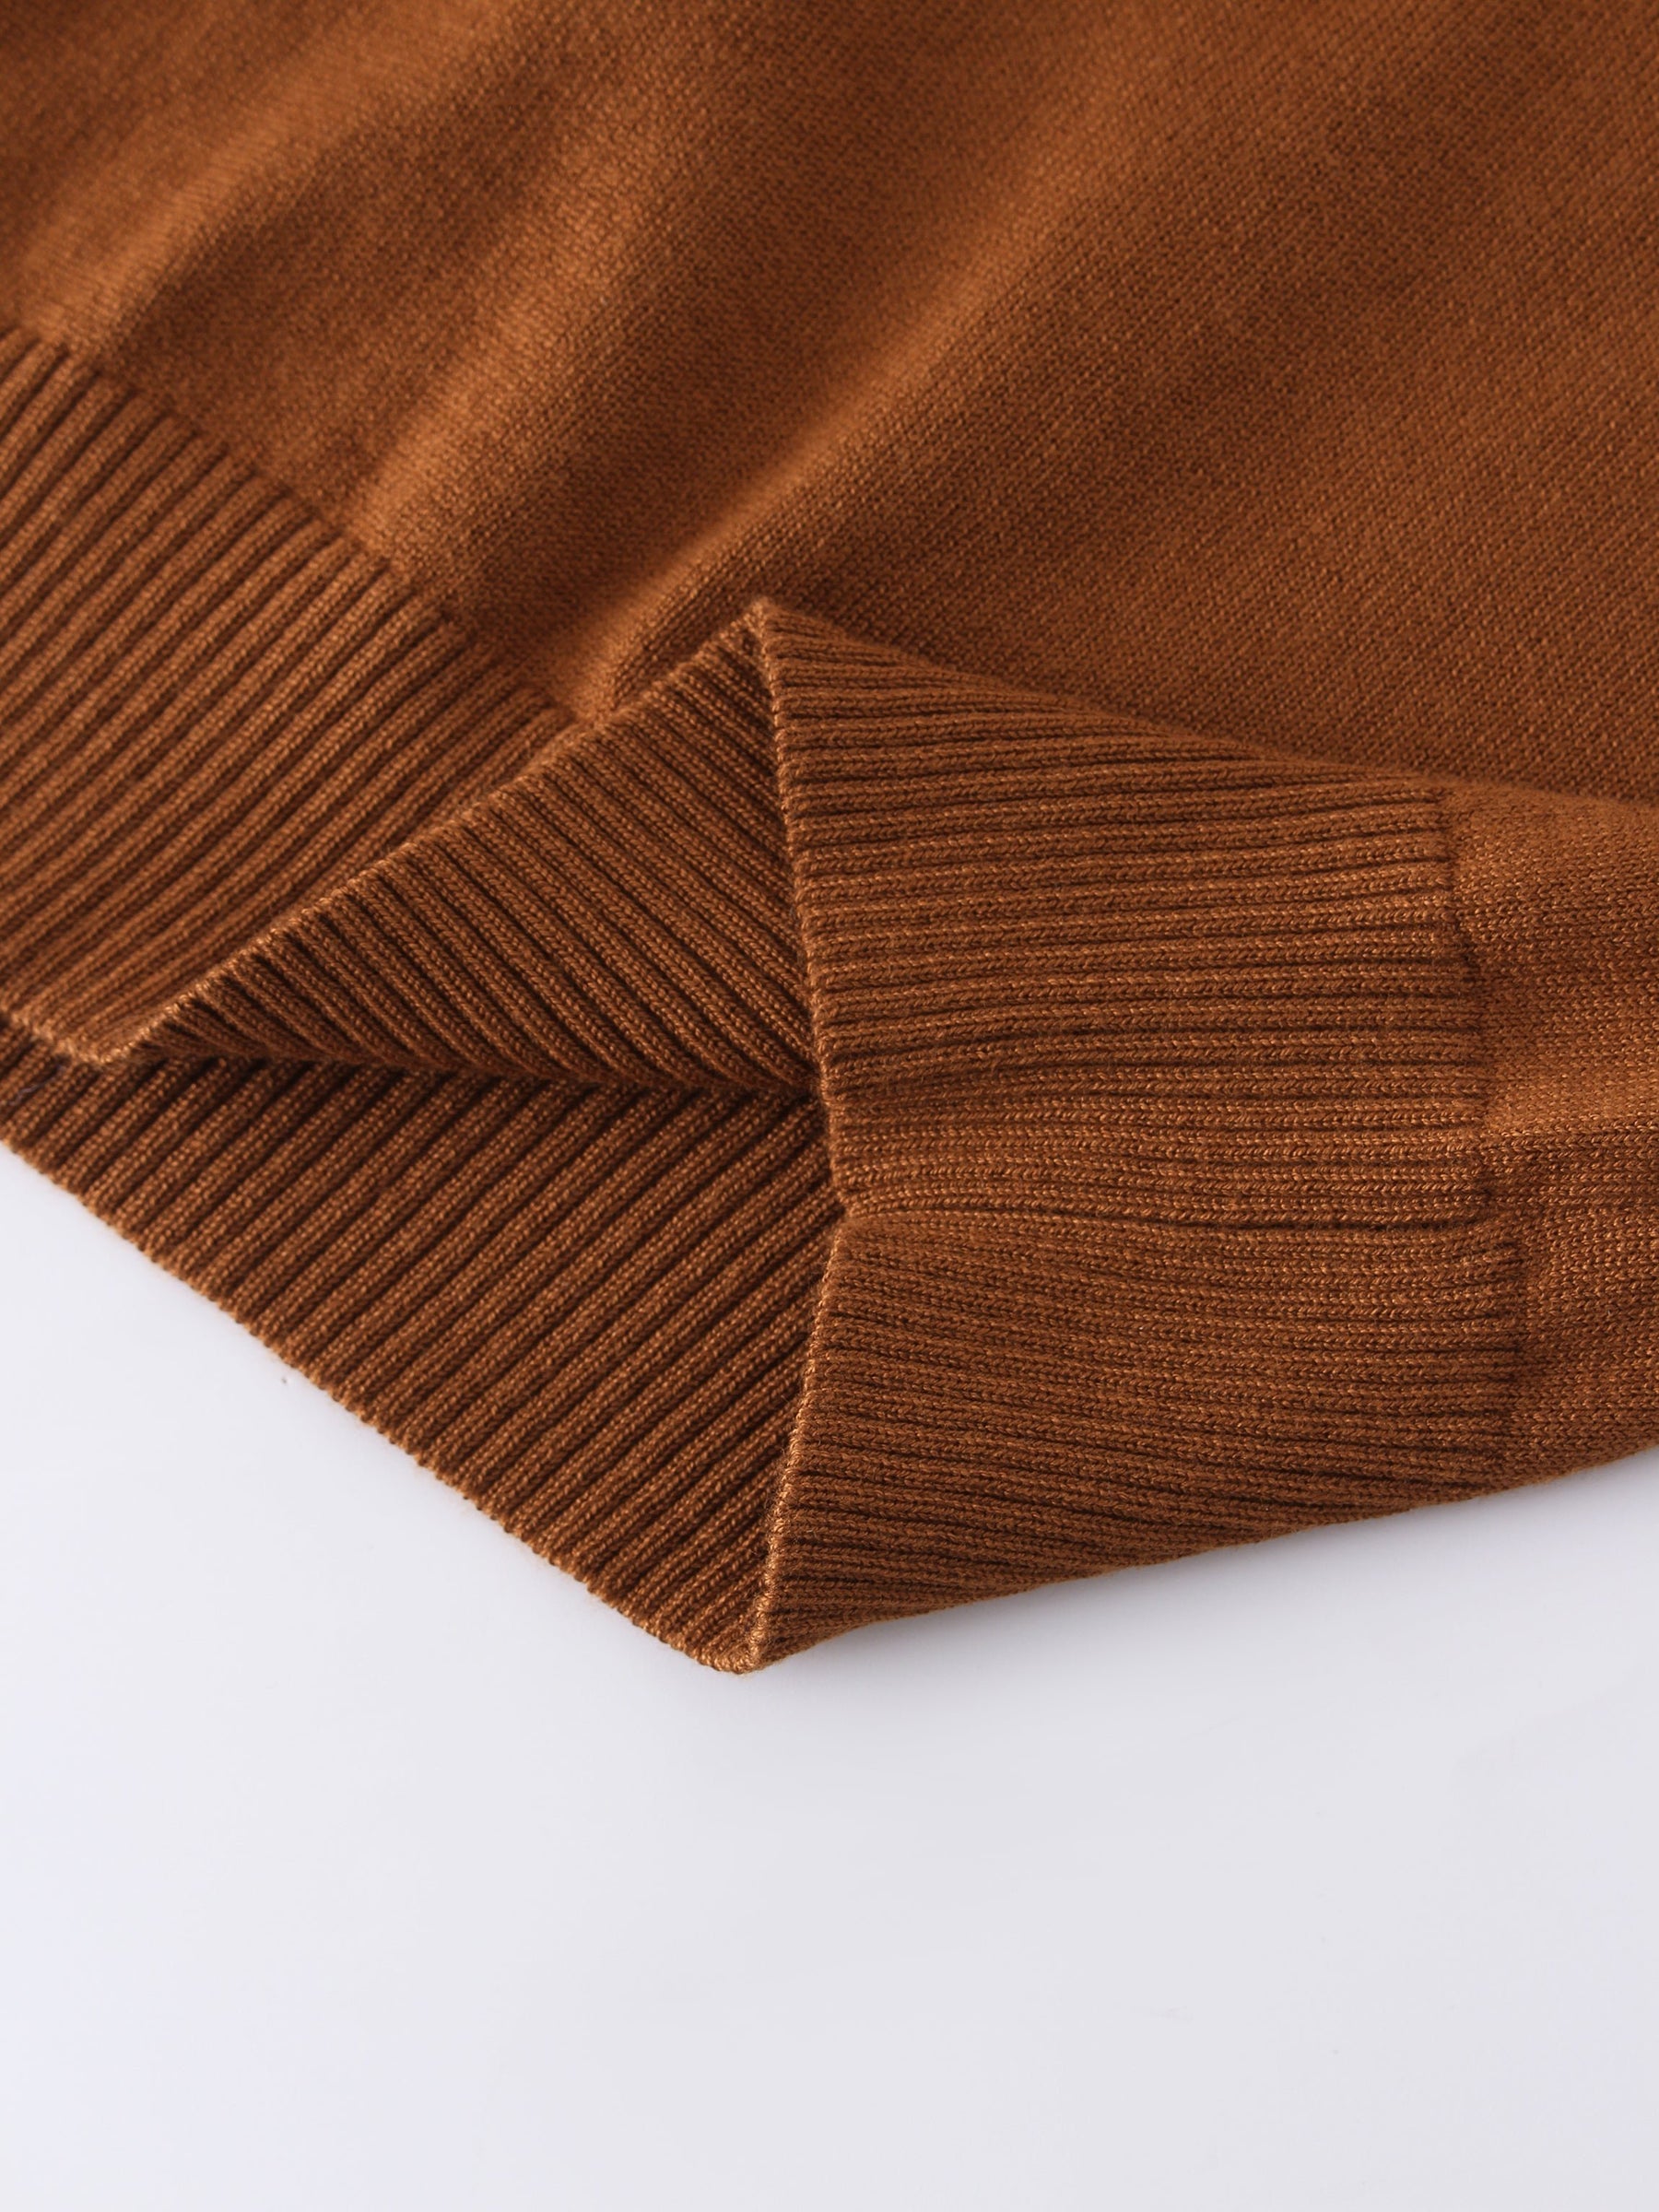 Basic Crew Sweater 3Q-Brown